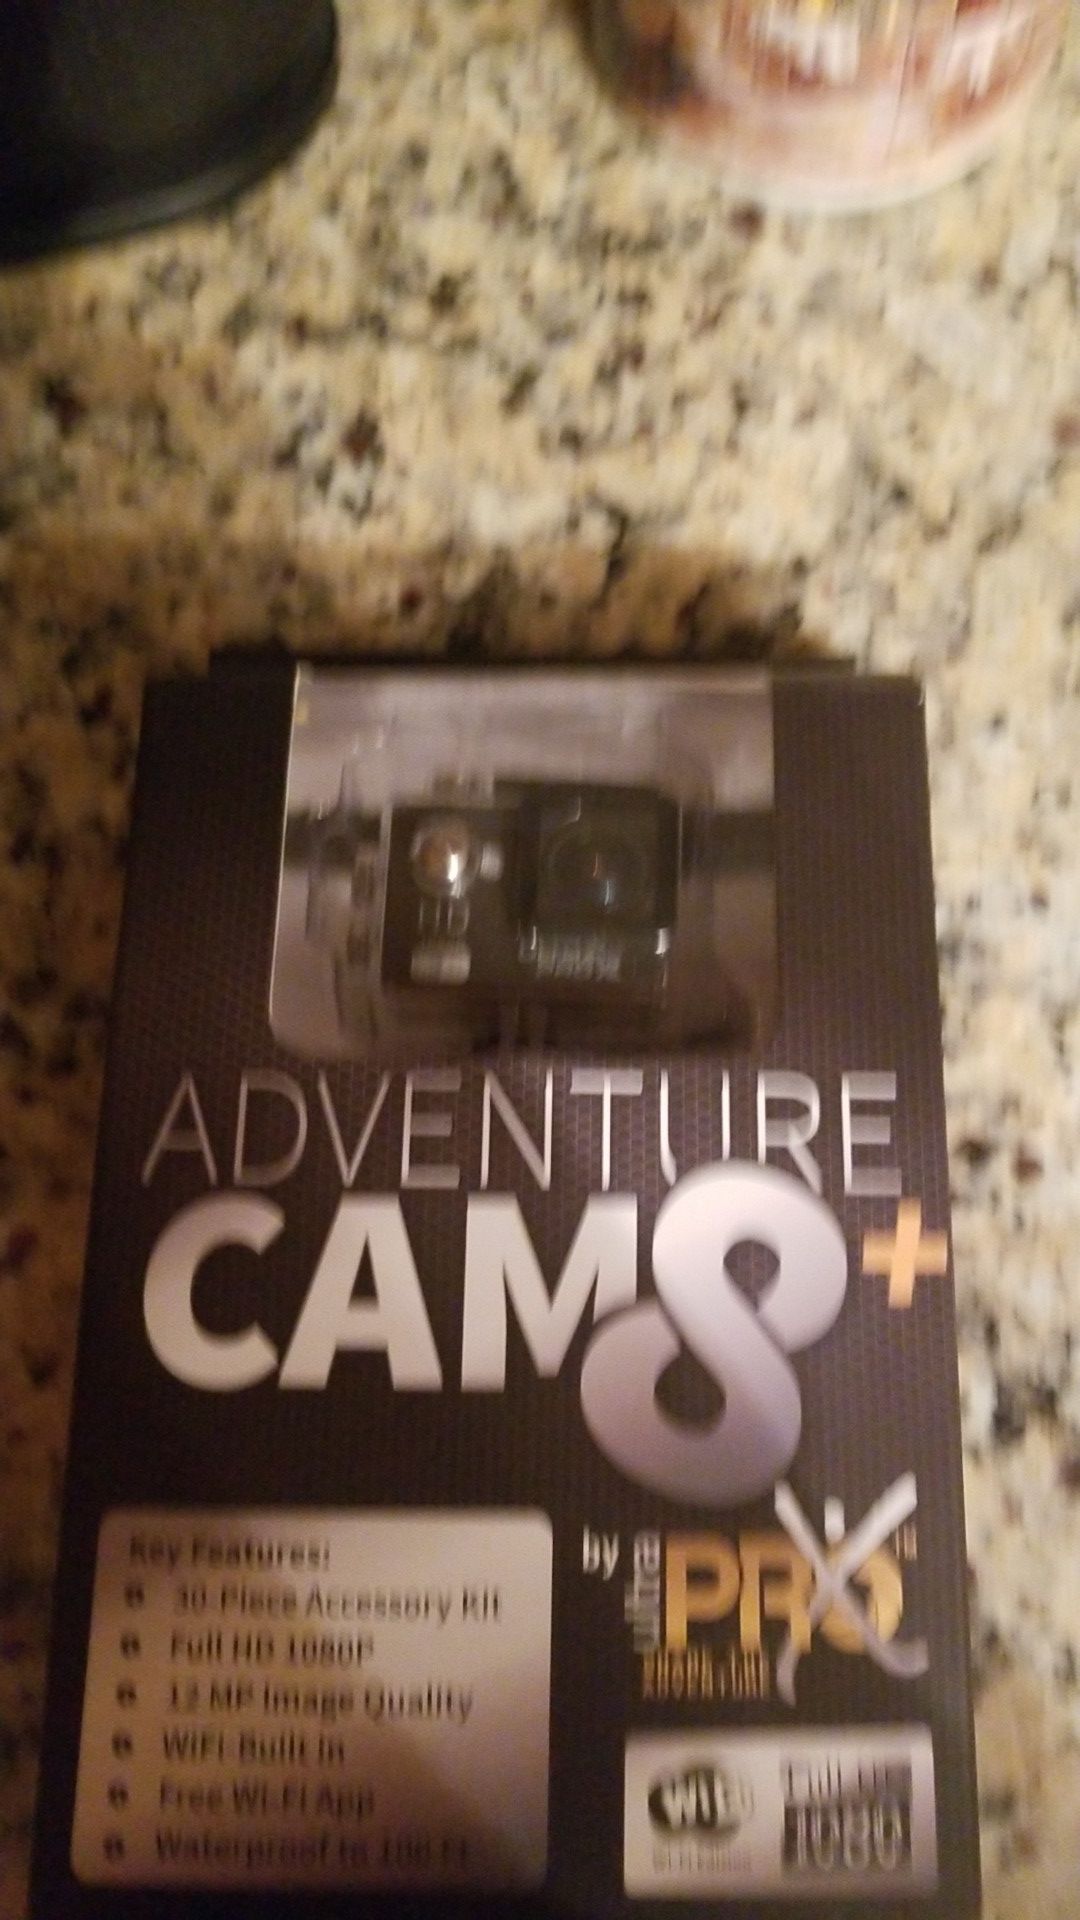 Adventure cam 8 plus(Waterproof camera)